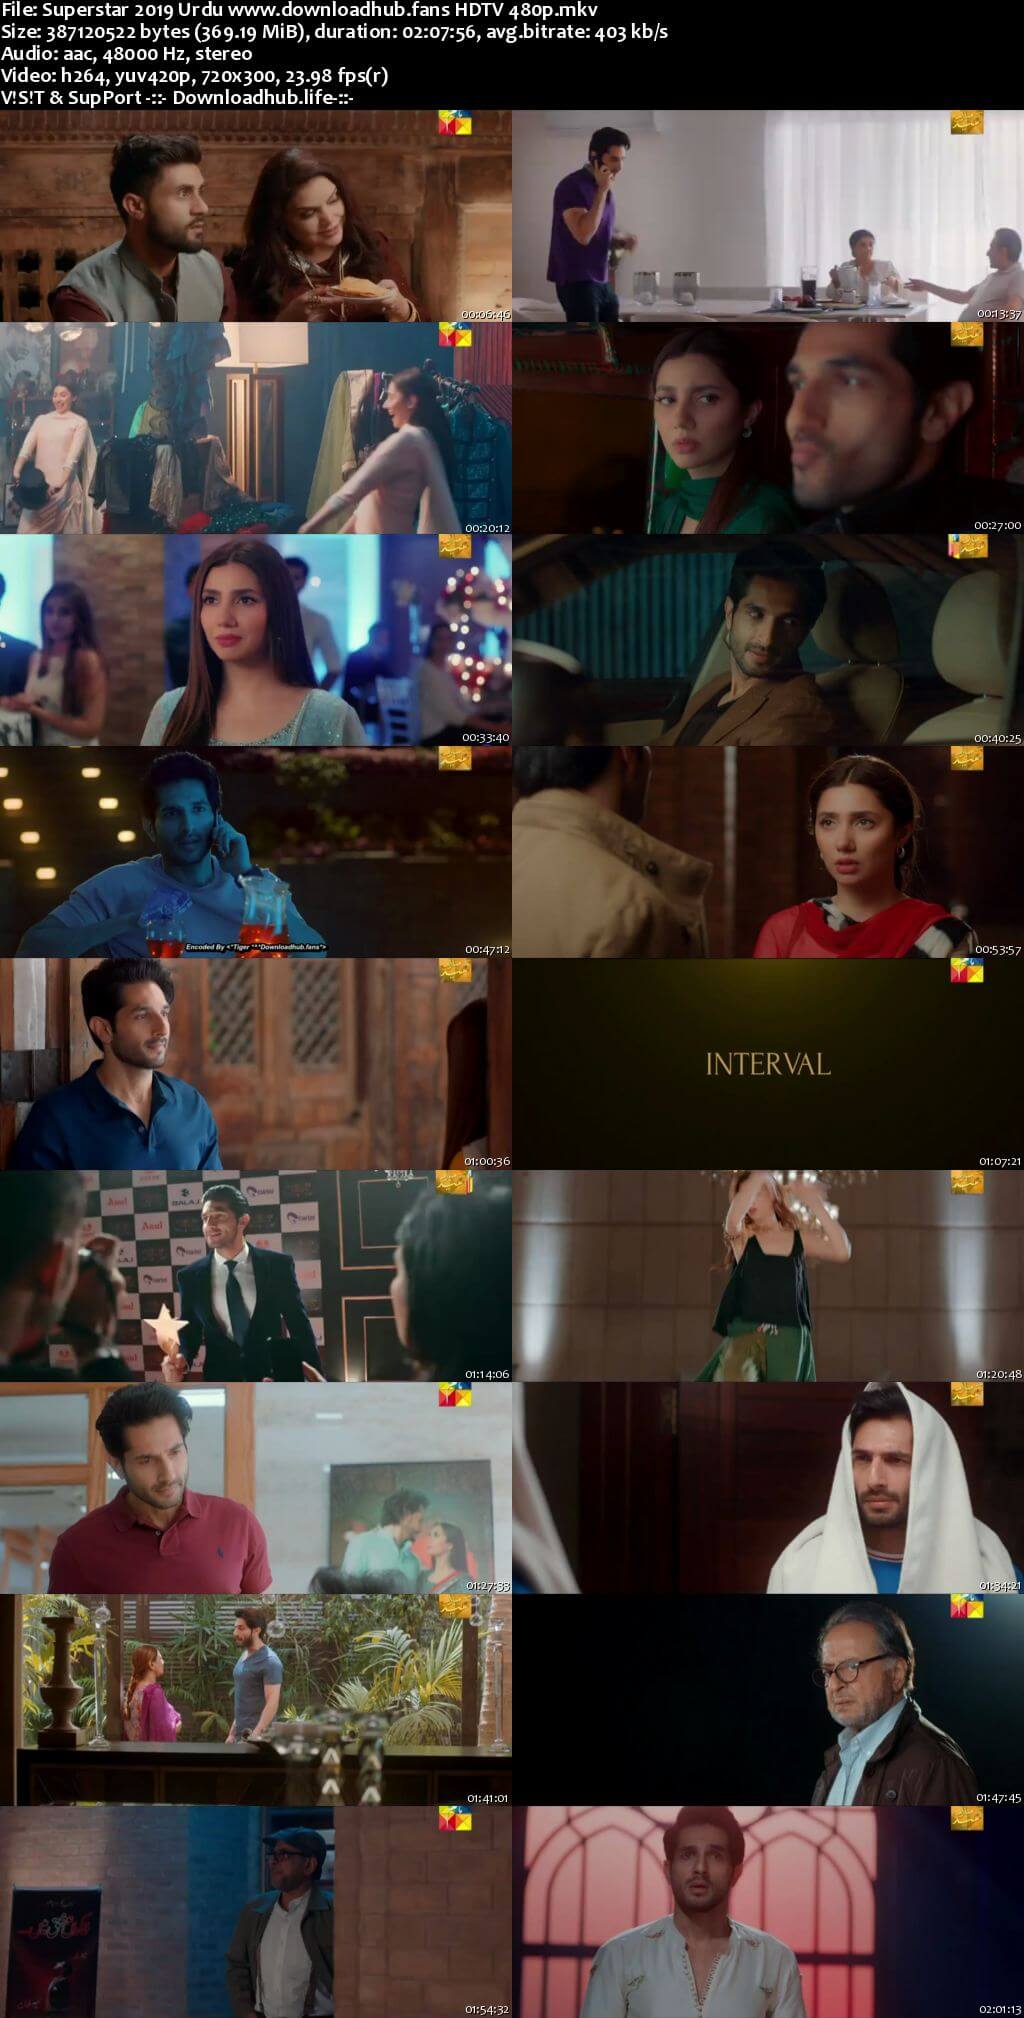 Superstar 2019 Urdu 350MB HDTV 480p